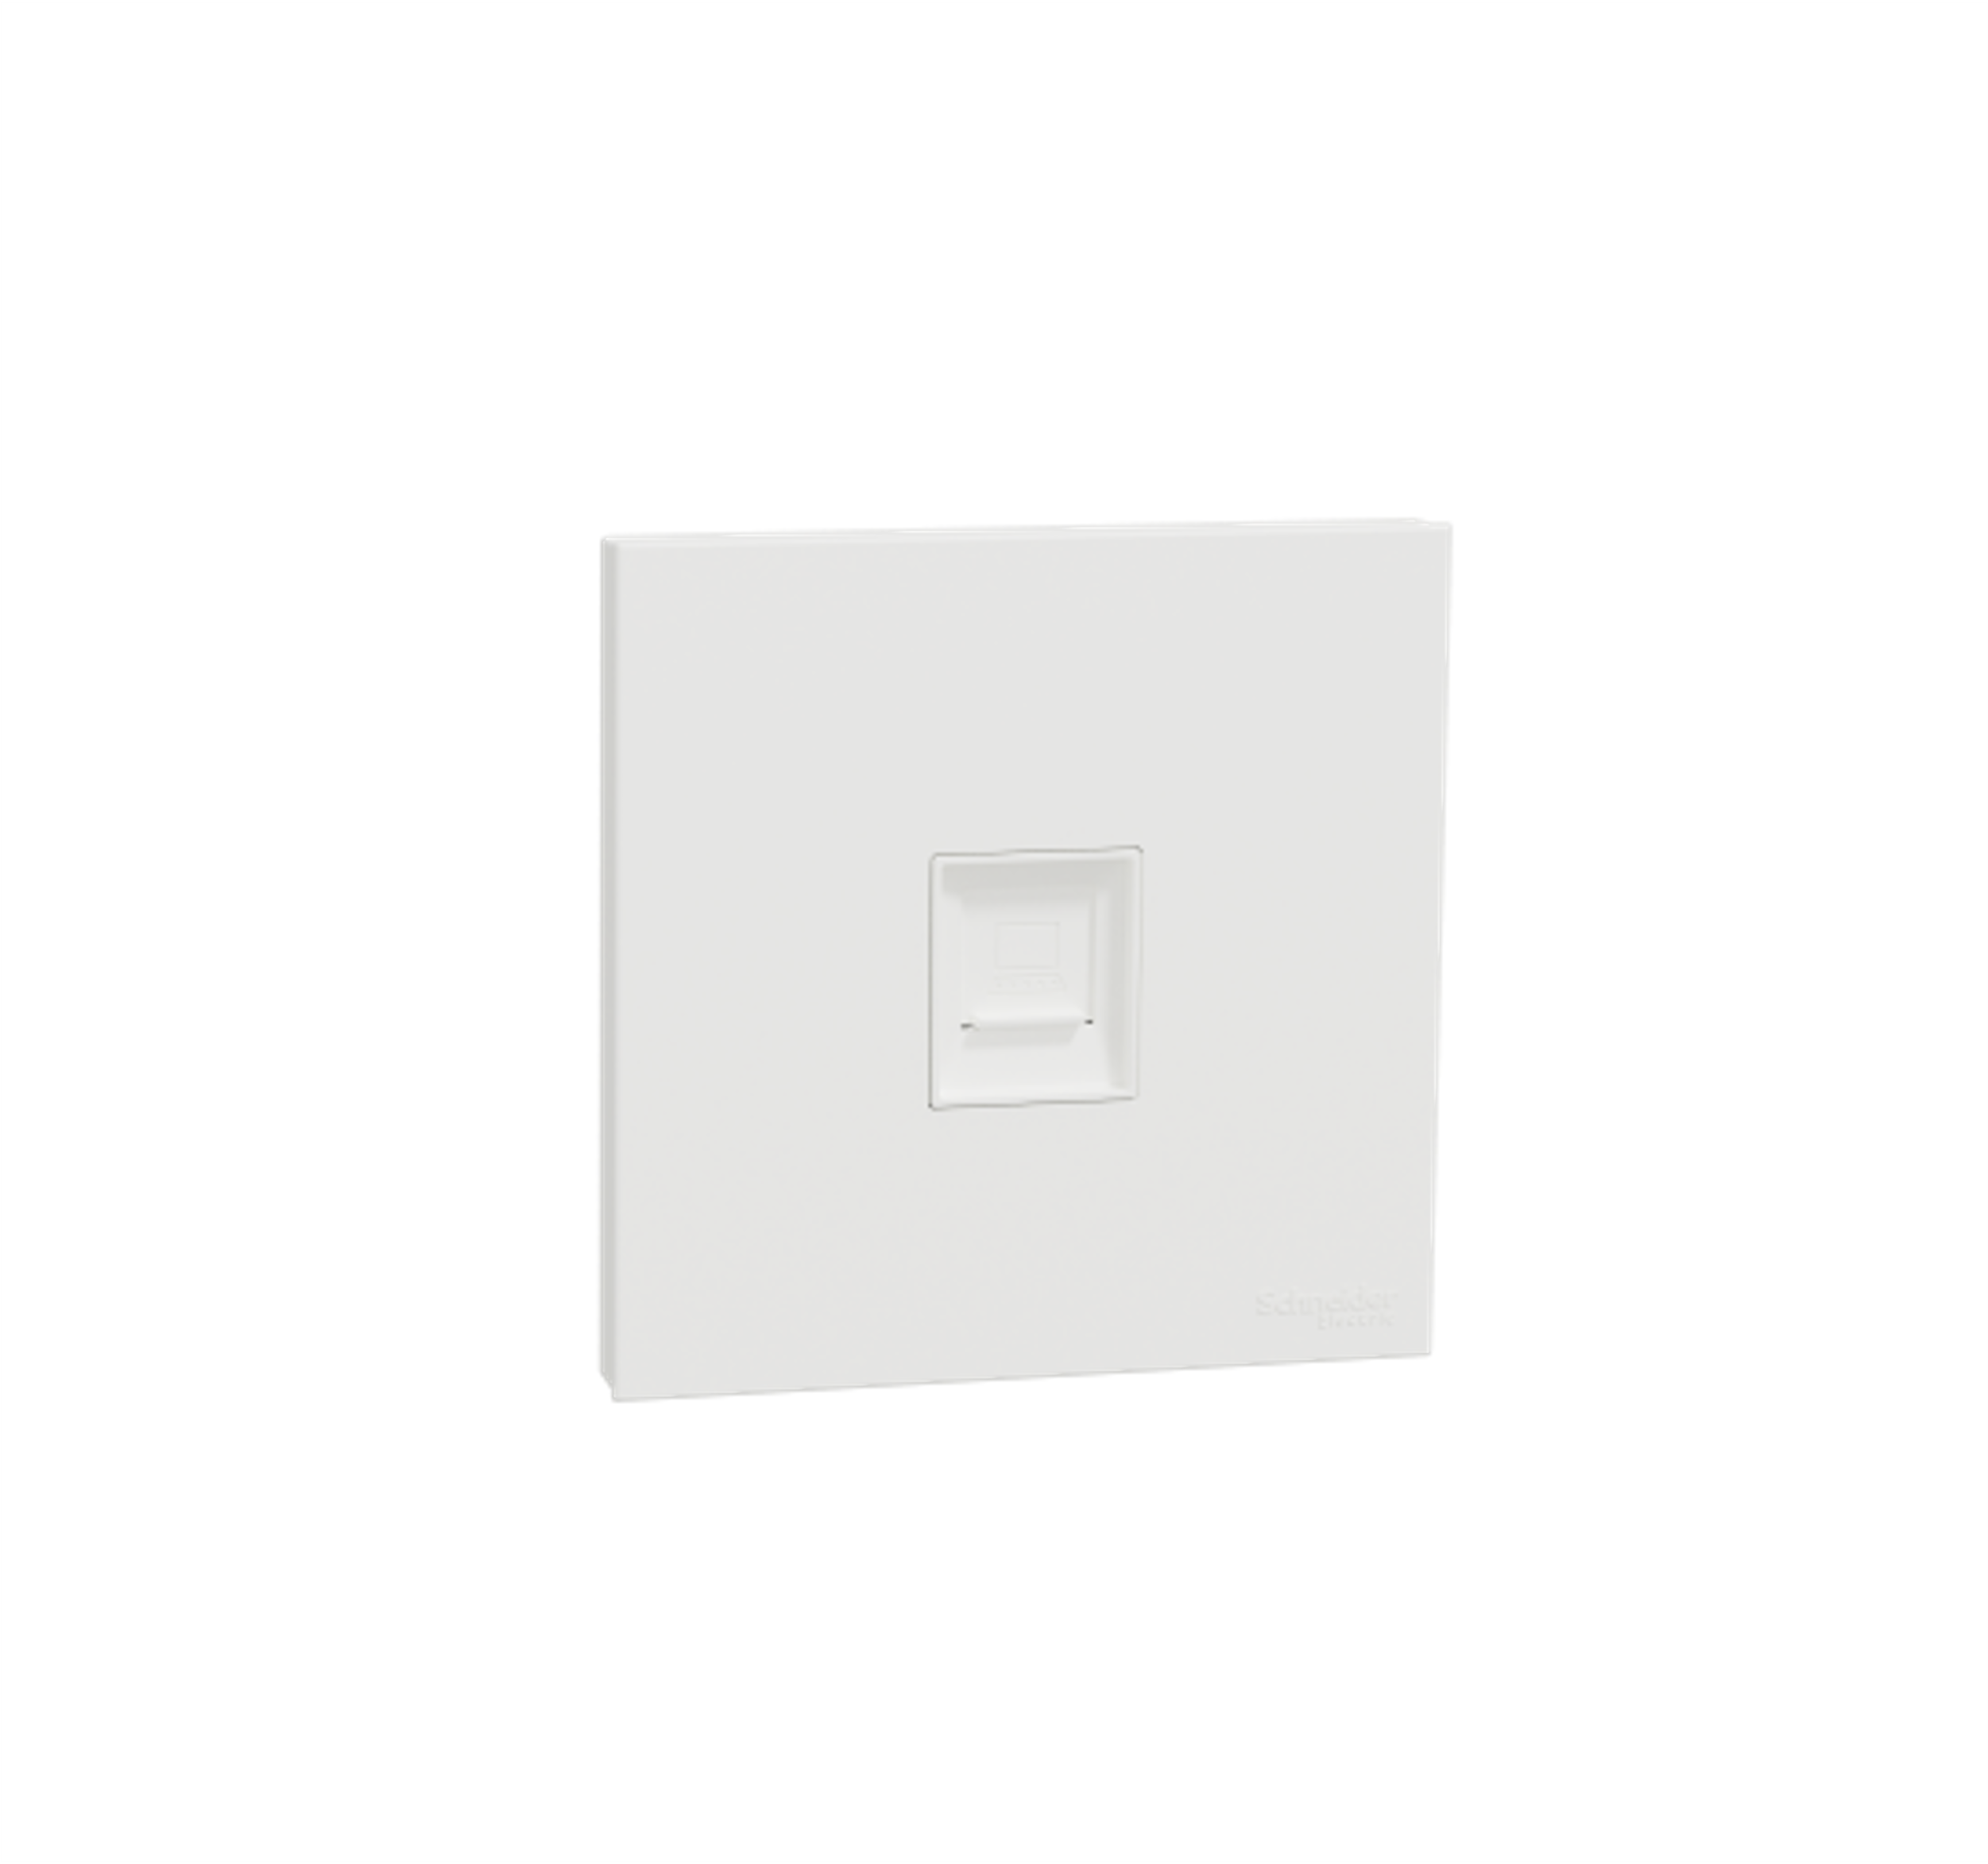 Tampoi Lighting :: Doorbells & Switches :: AvatarOn C - 1 Gang Cat 6 ...